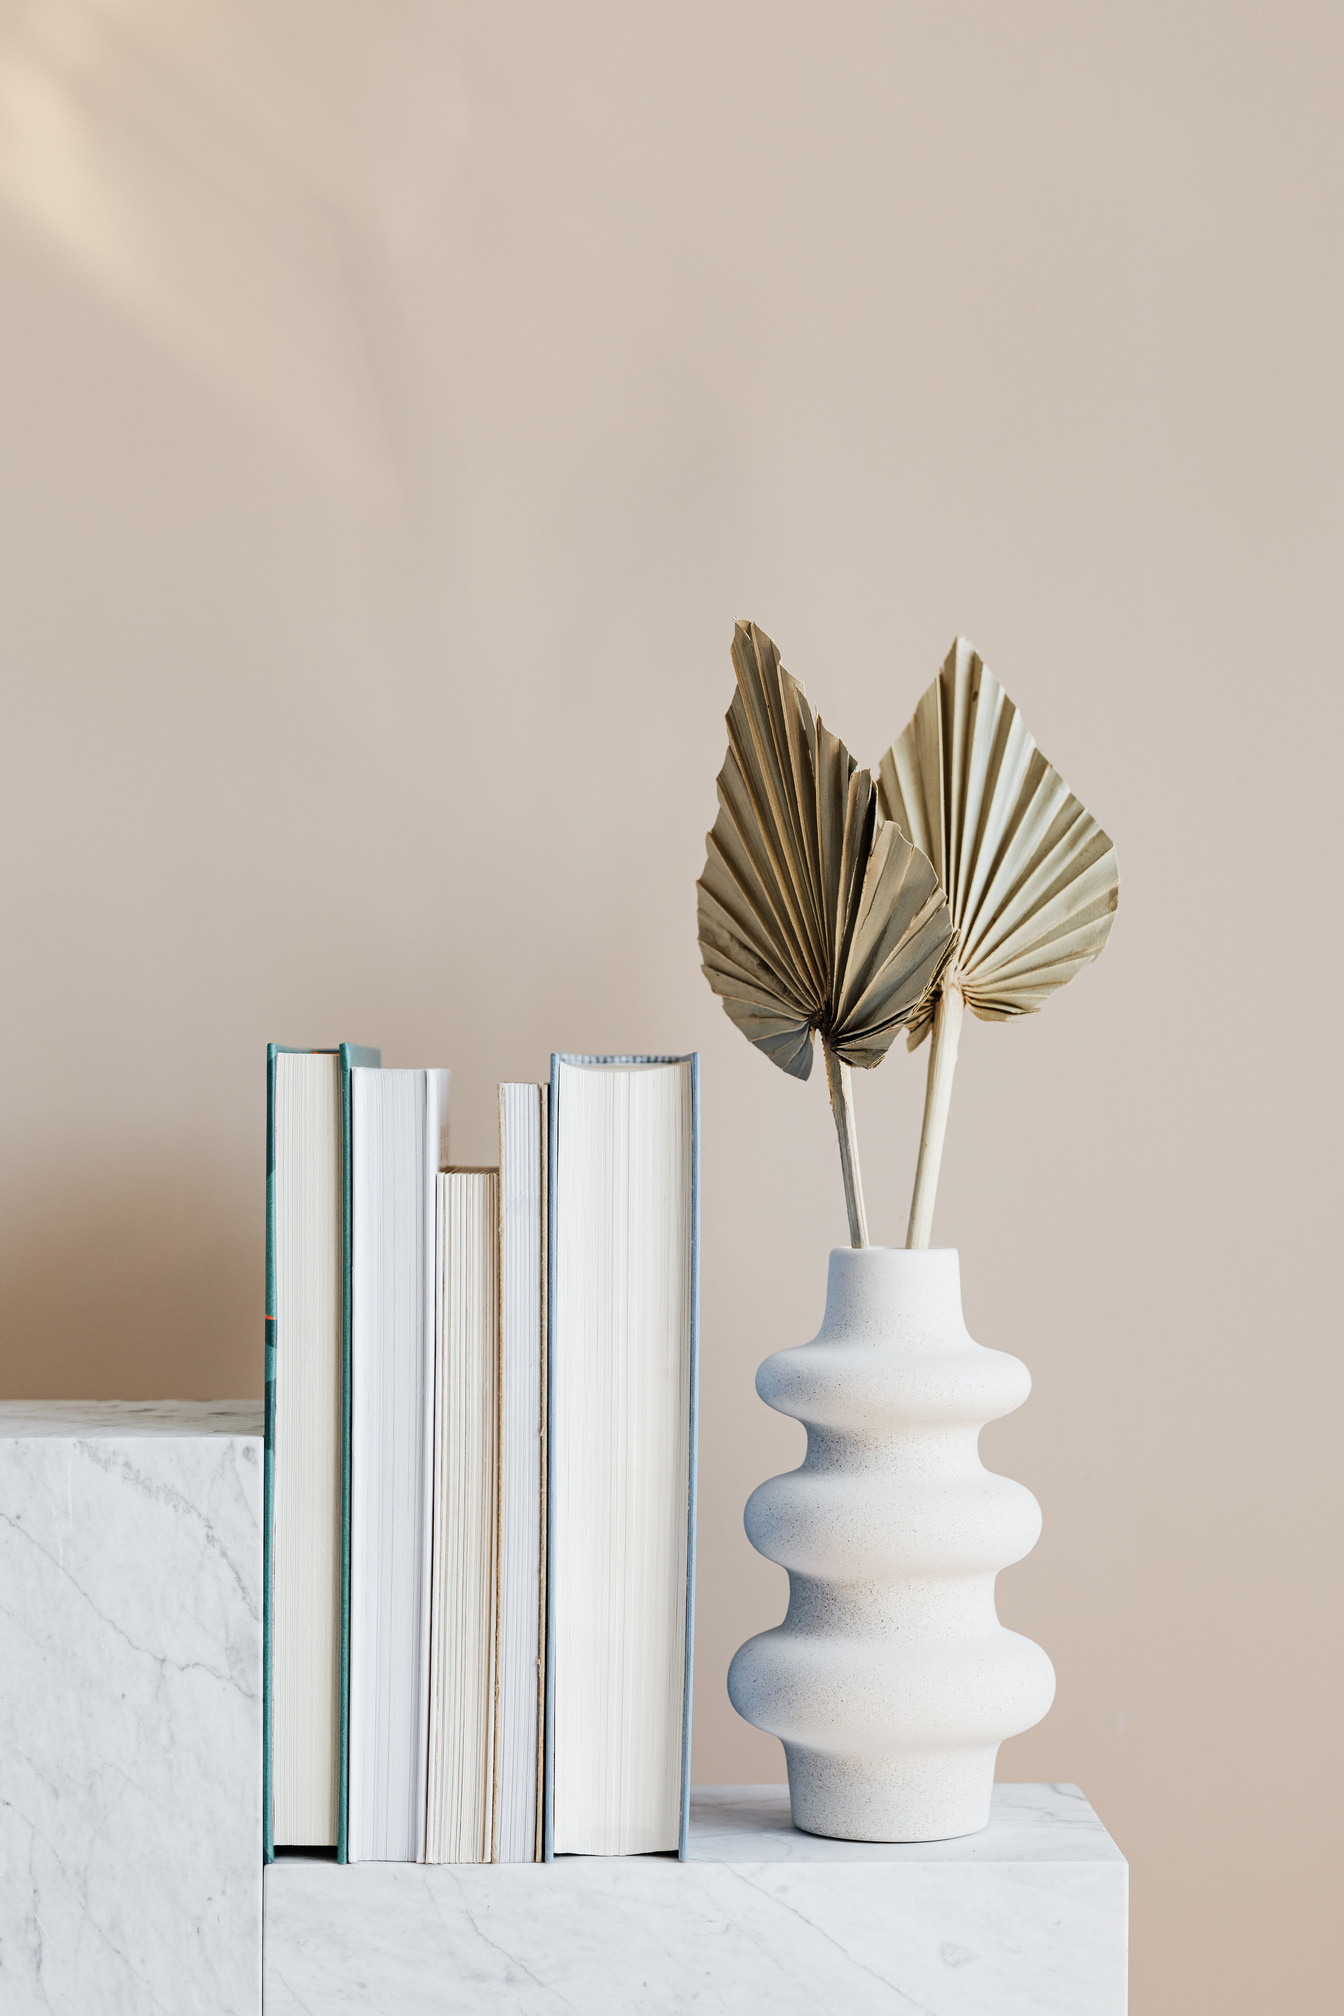 Geometric marble shelf with books and decorative vase